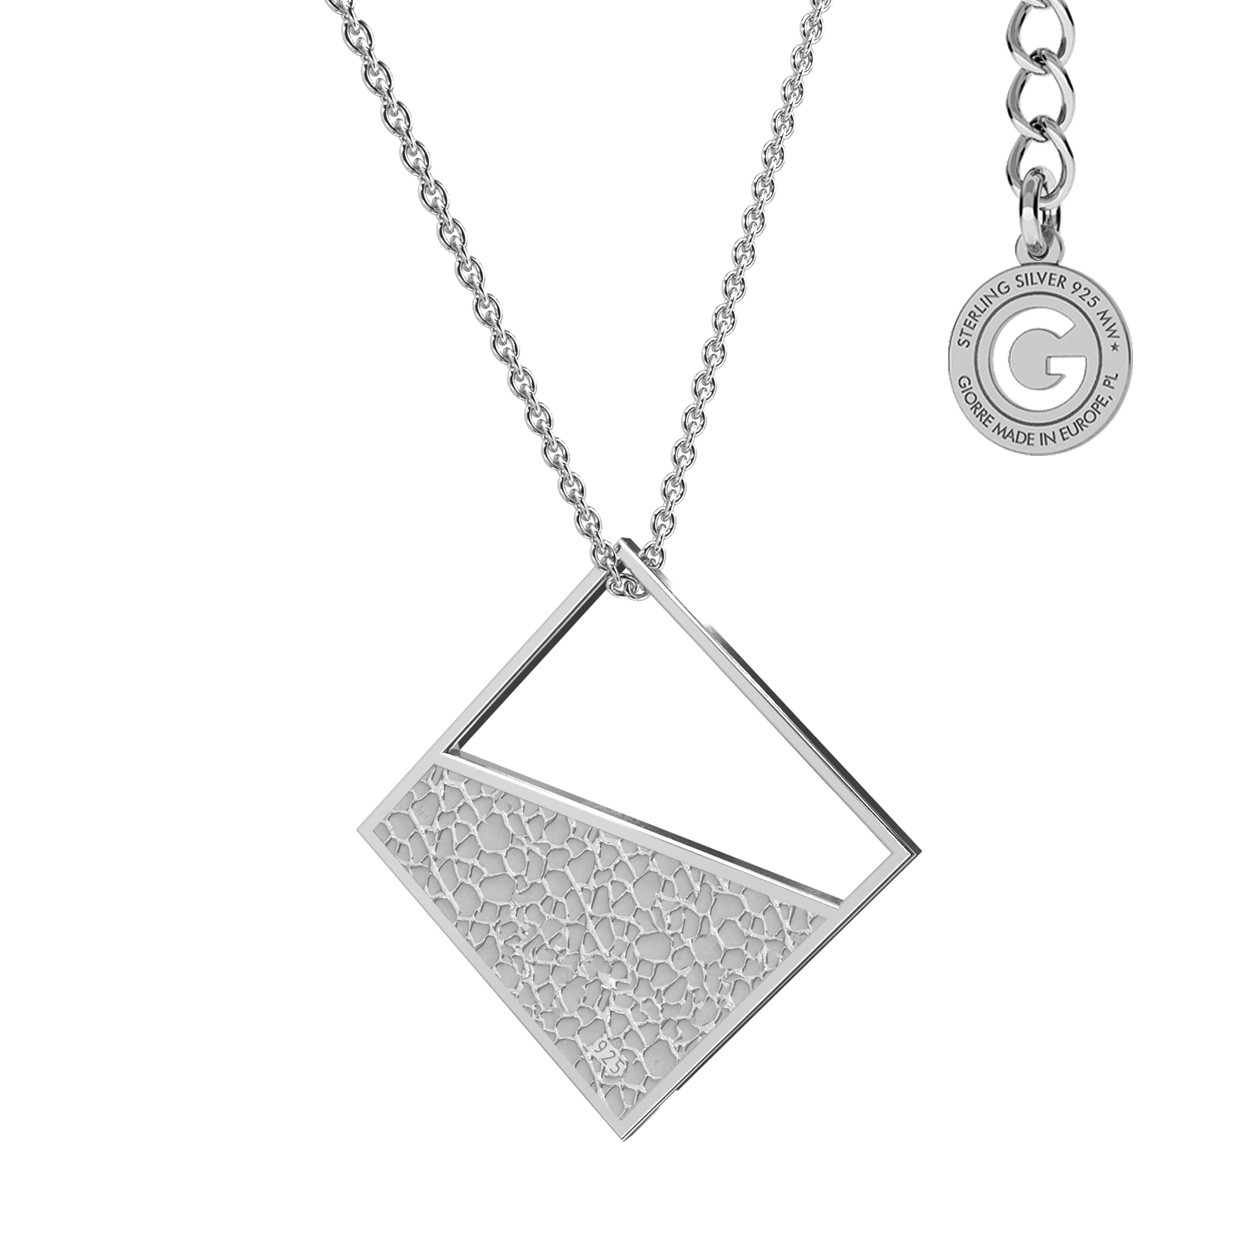 Geometric necklace diamond pendant, sterling silver 925